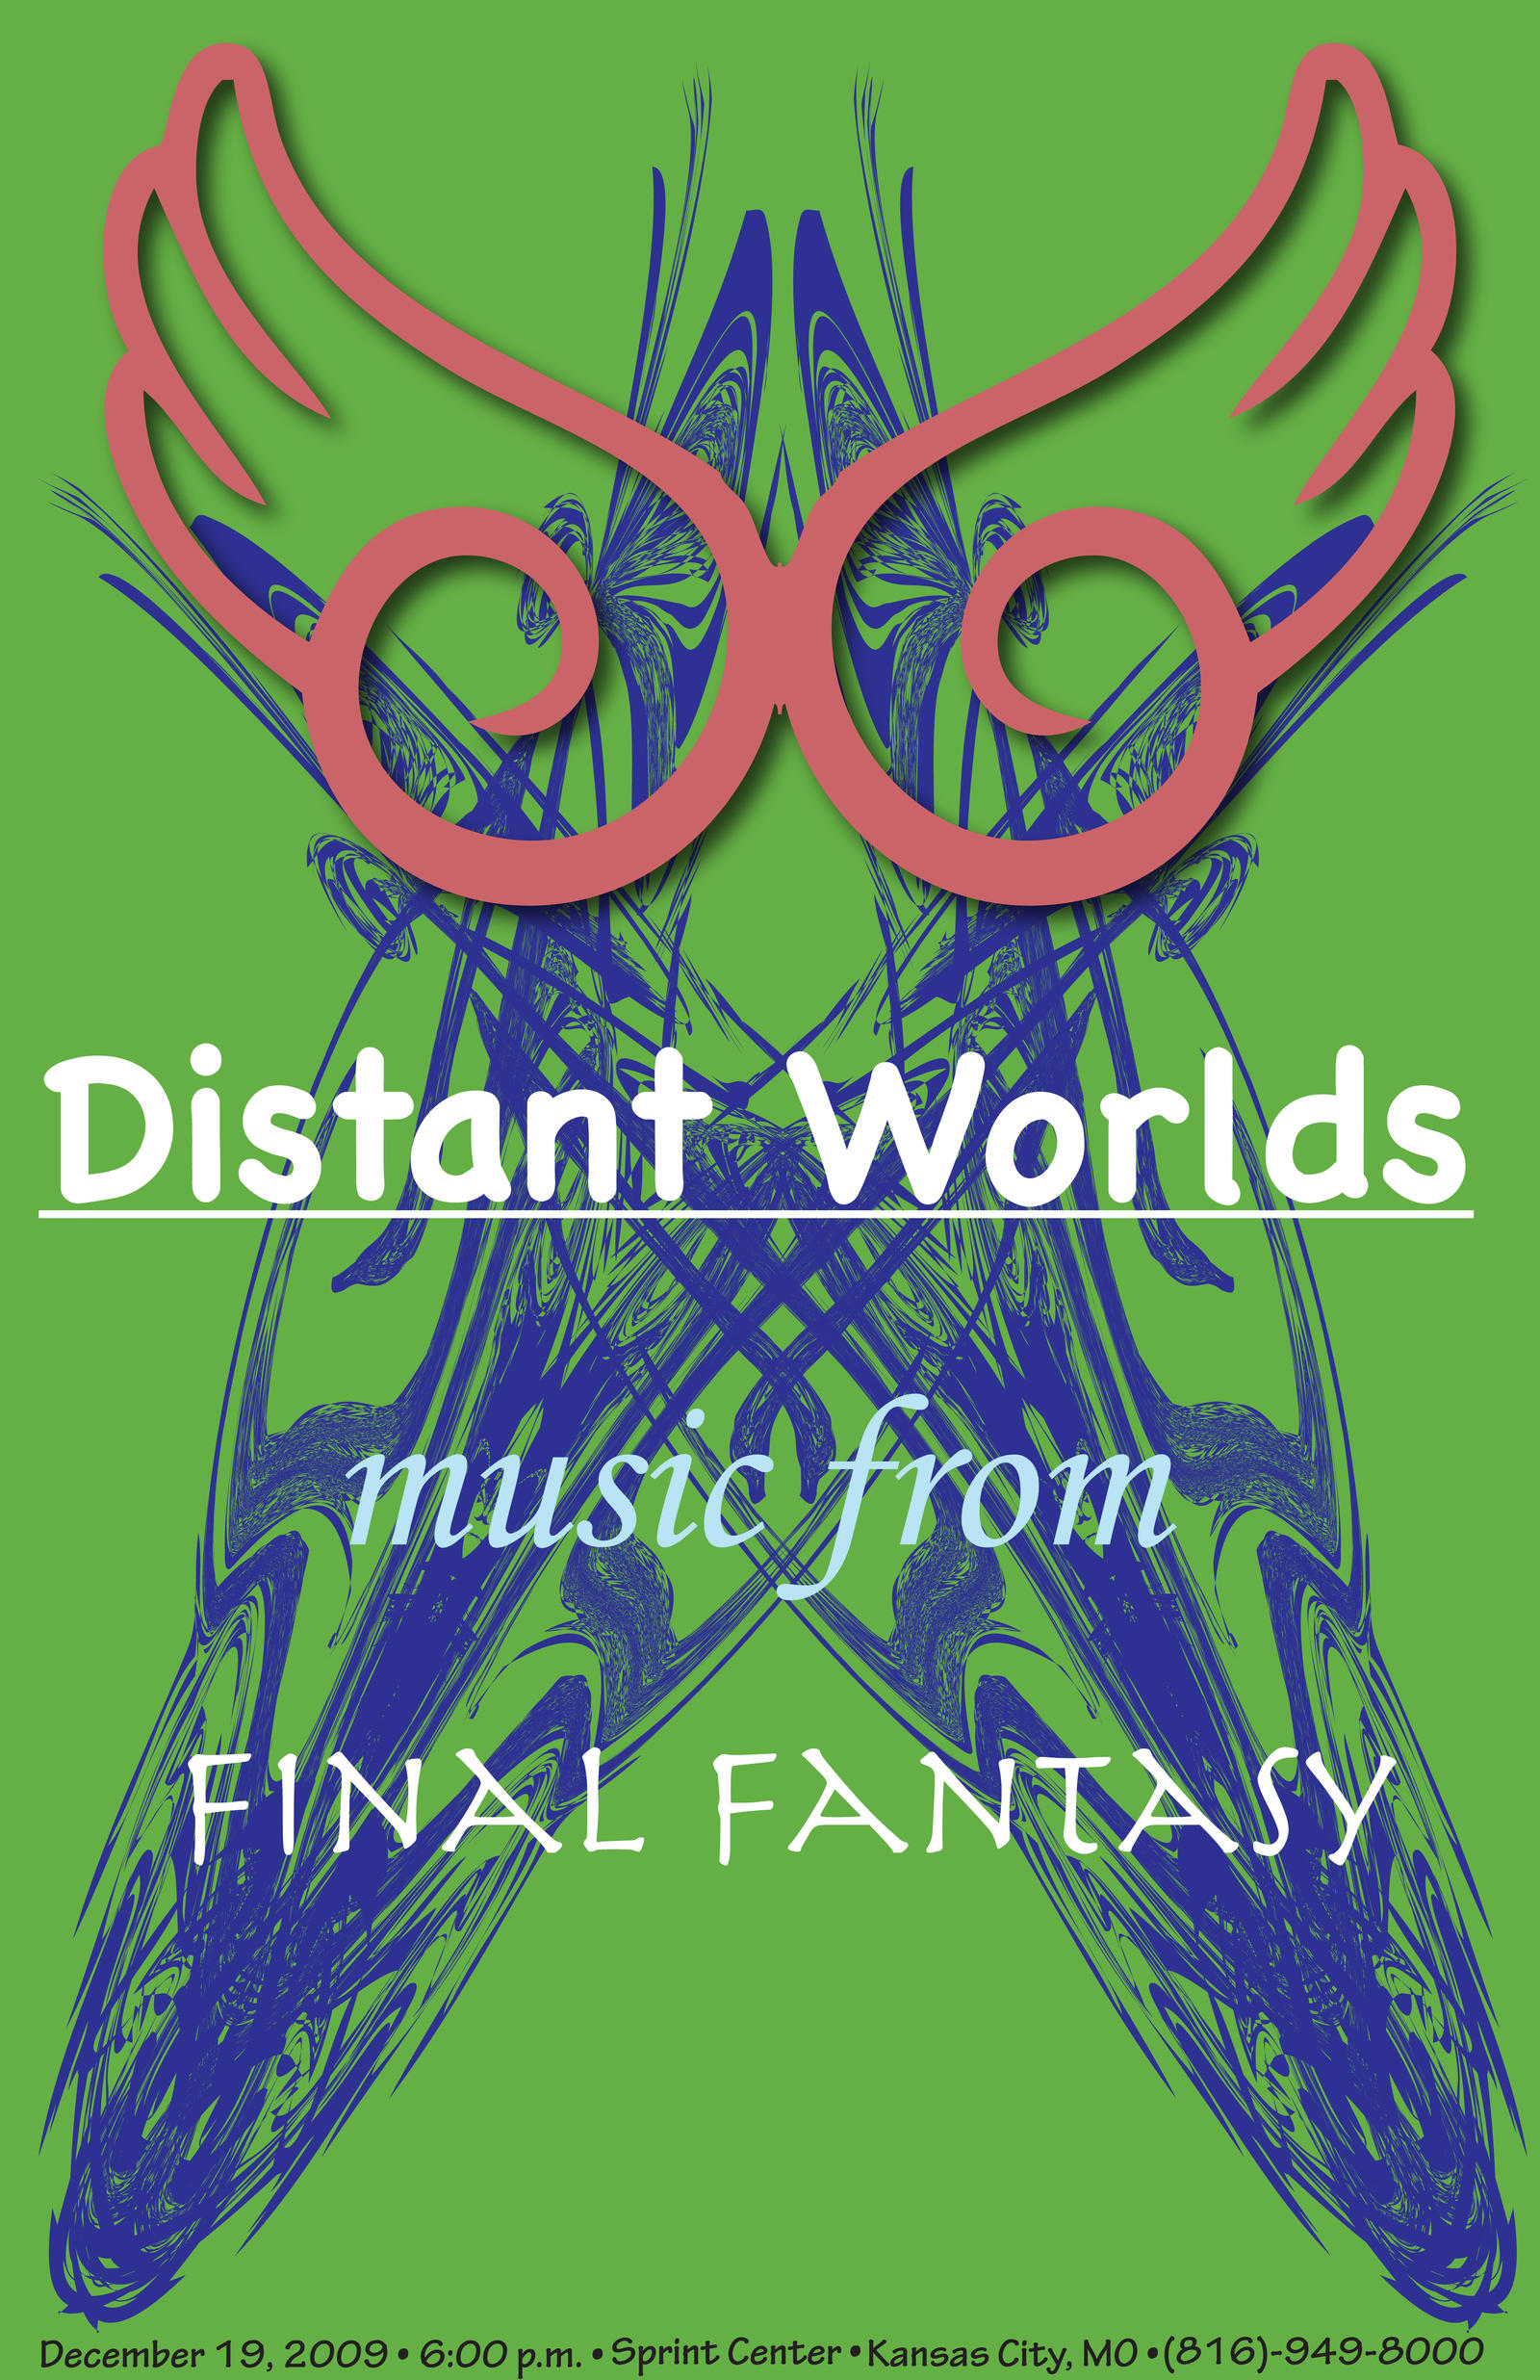 Final Fantasy, Distant Worlds Poster 3 by soraroks on DeviantArt